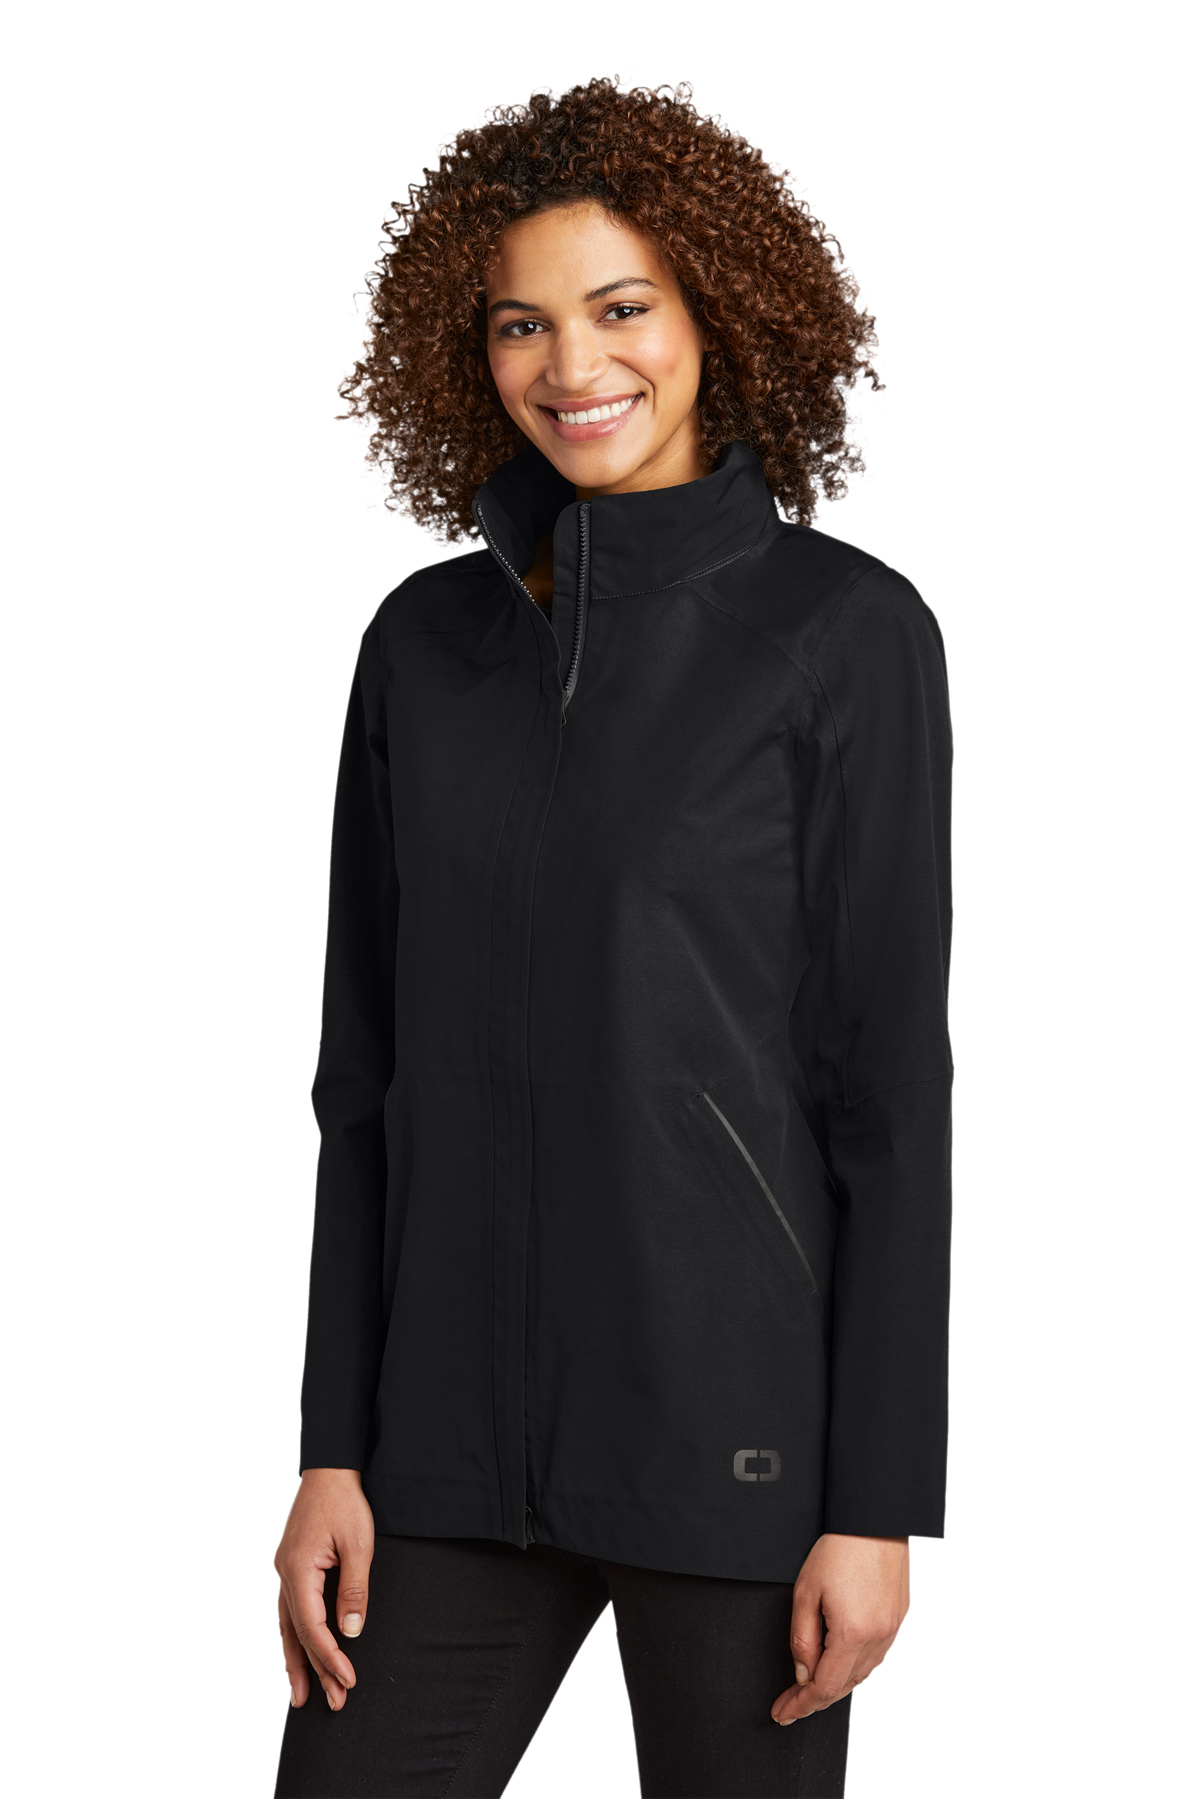 OGIO Ladies Utilitarian Jacket | Product | Company Casuals